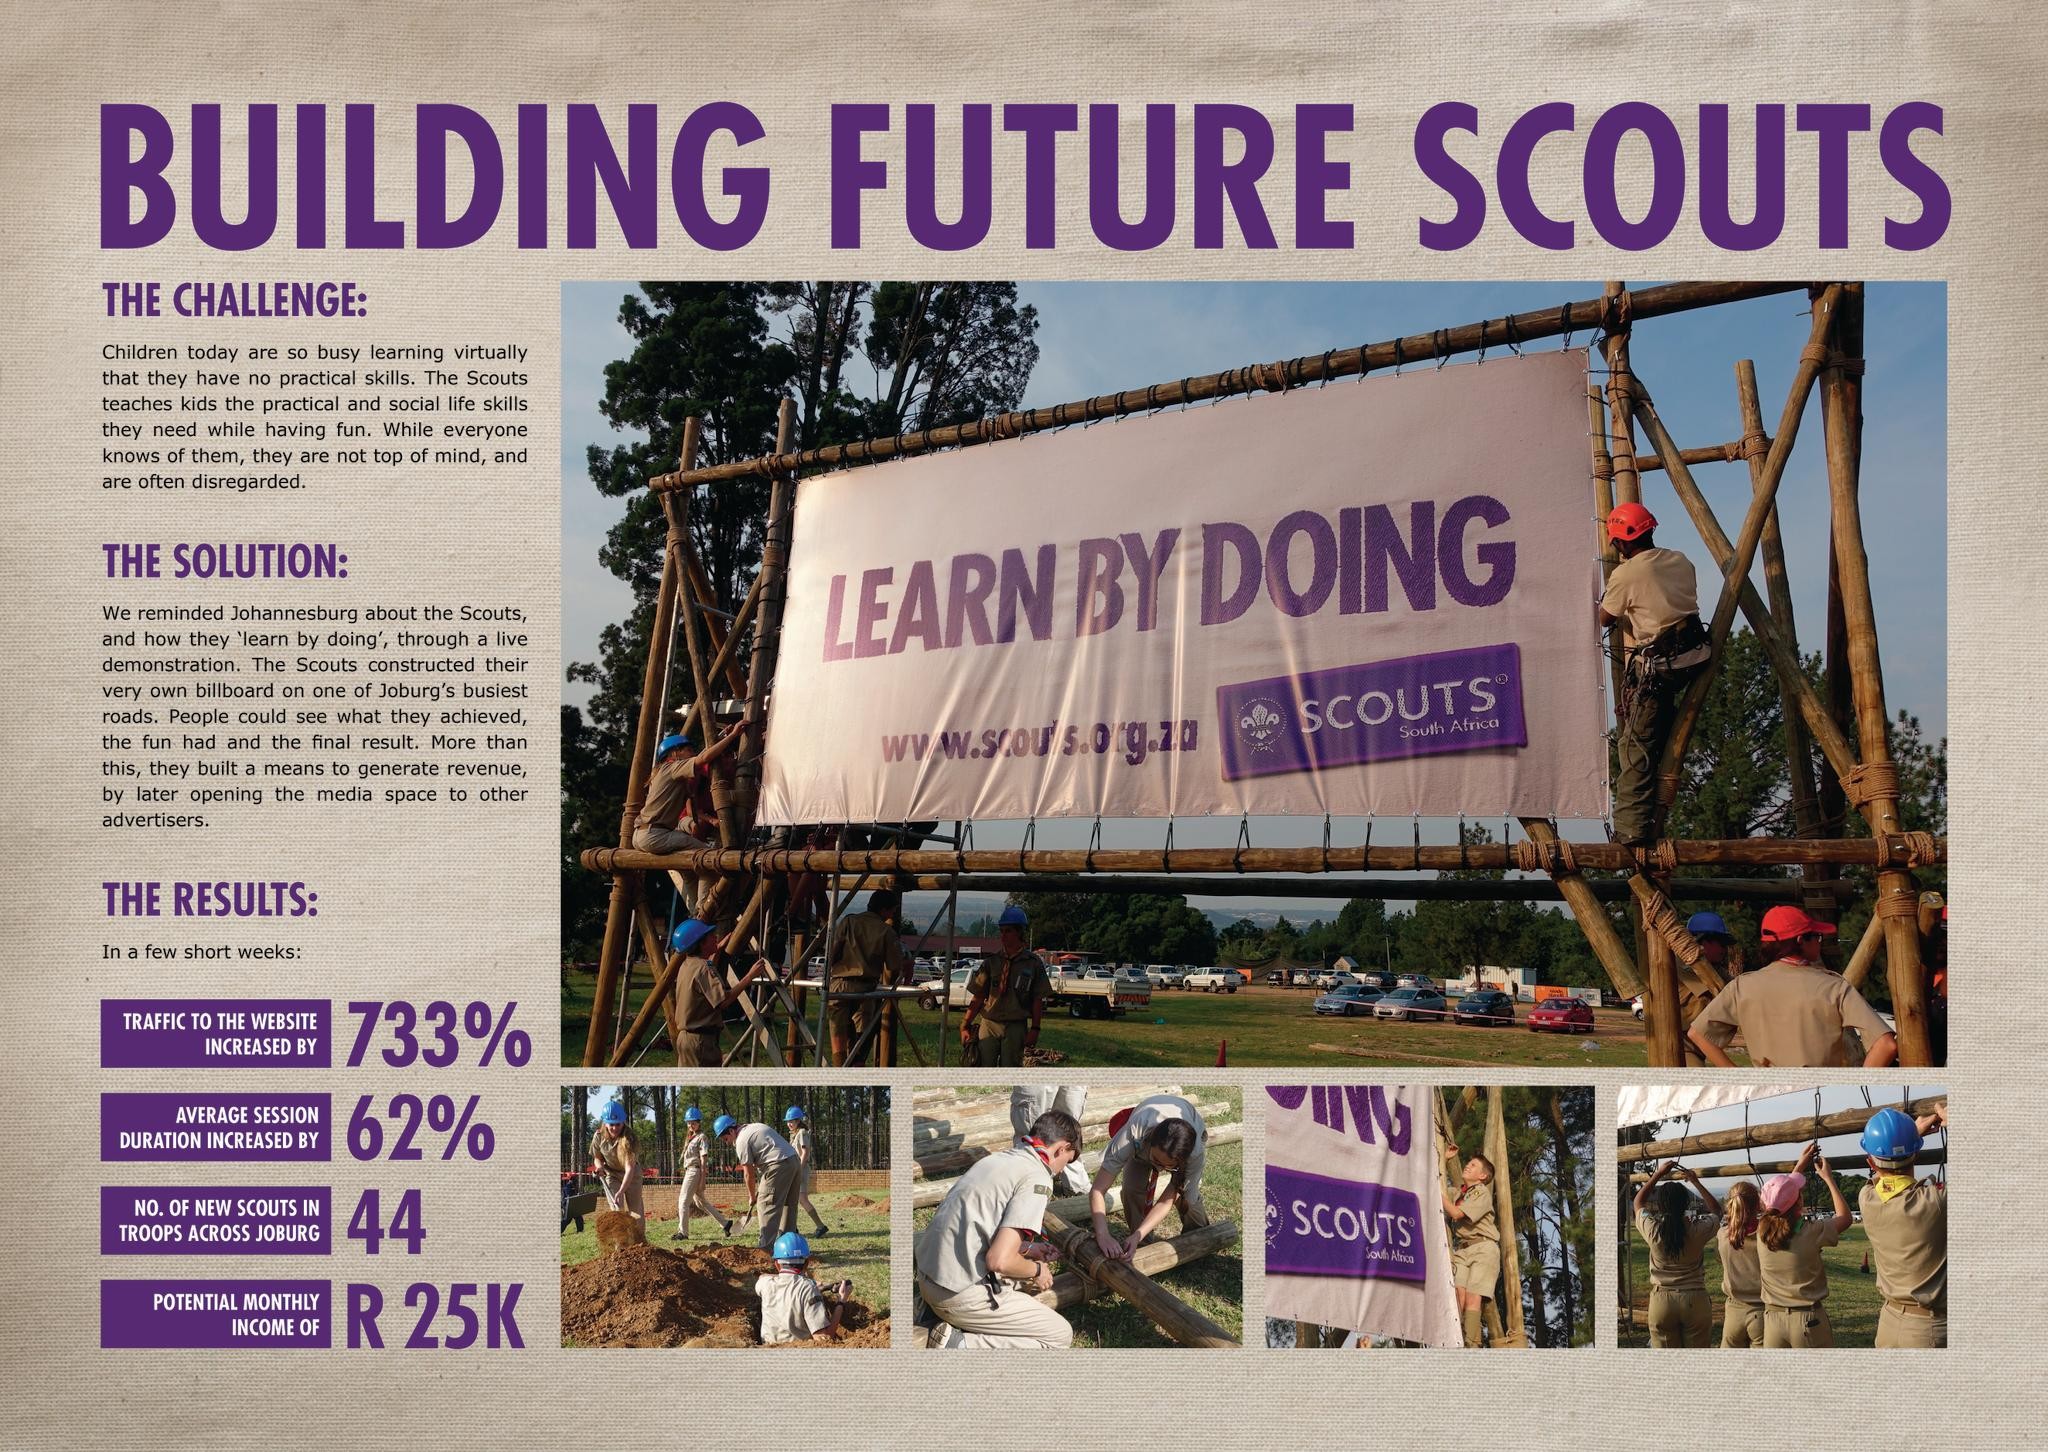 Building future Scouts